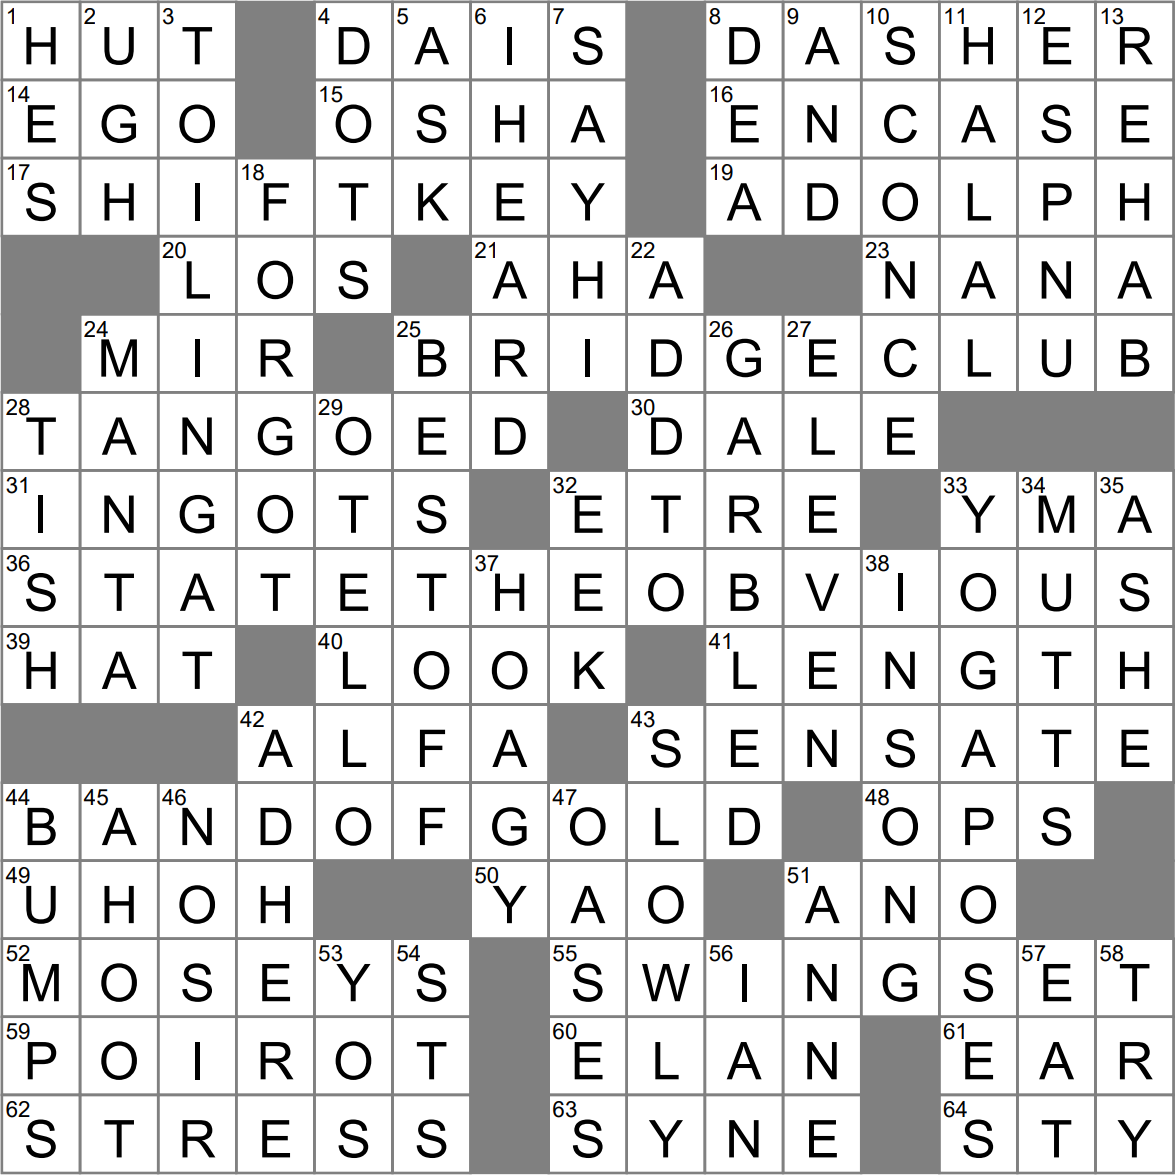 LA Times Crossword 3 Oct 23 Tuesday LAXCrossword com